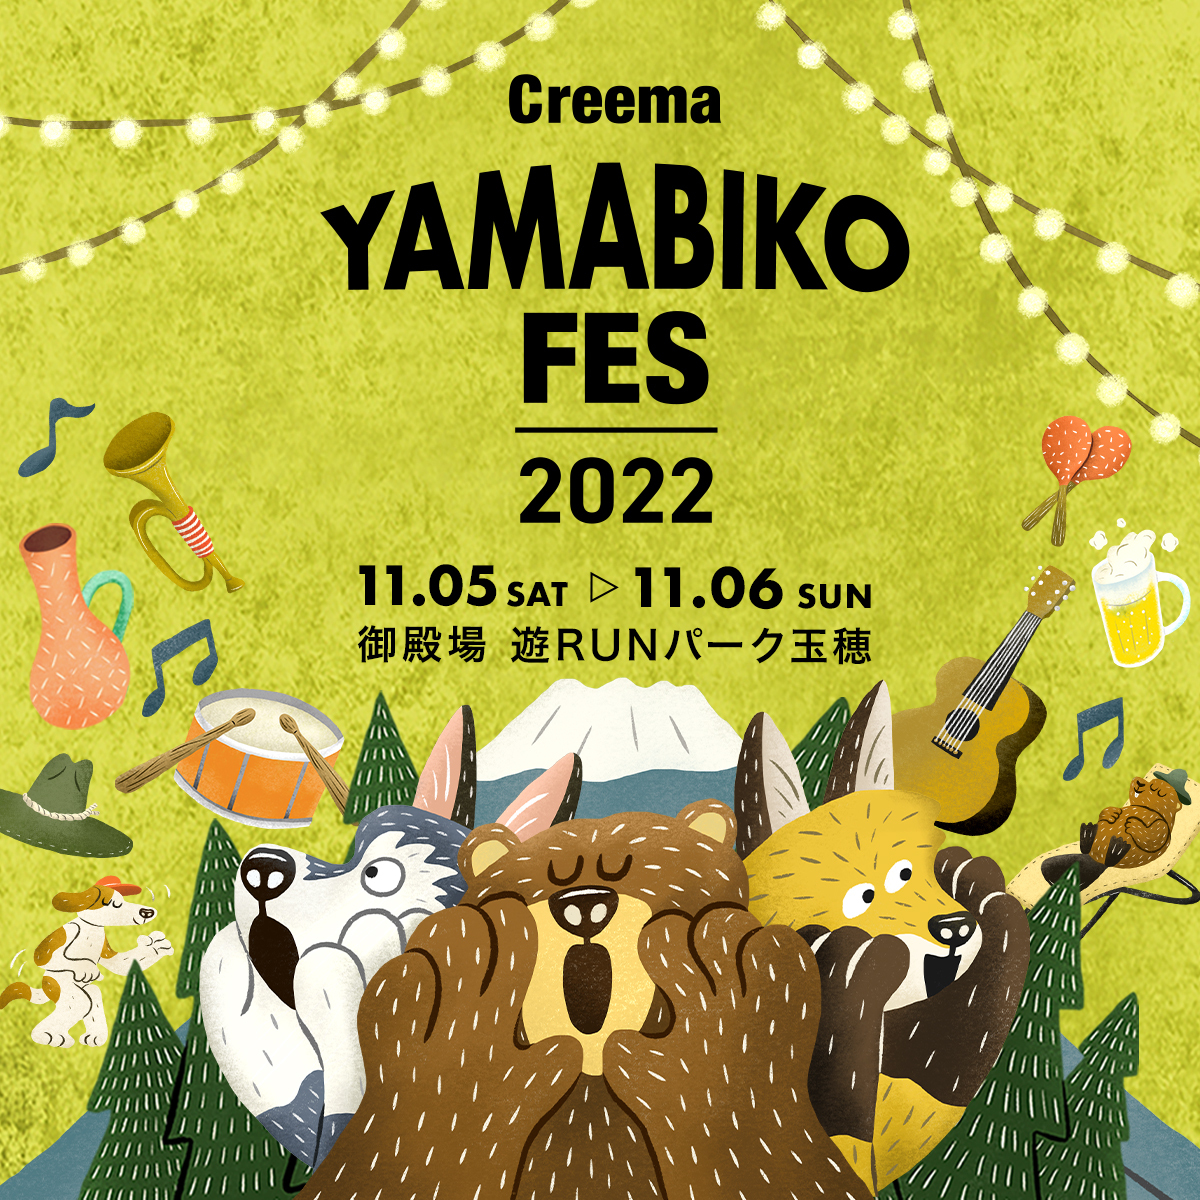 Creema YAMABIKO FES 2022 サウナヴィレッジの企画・運営をさせていただきます